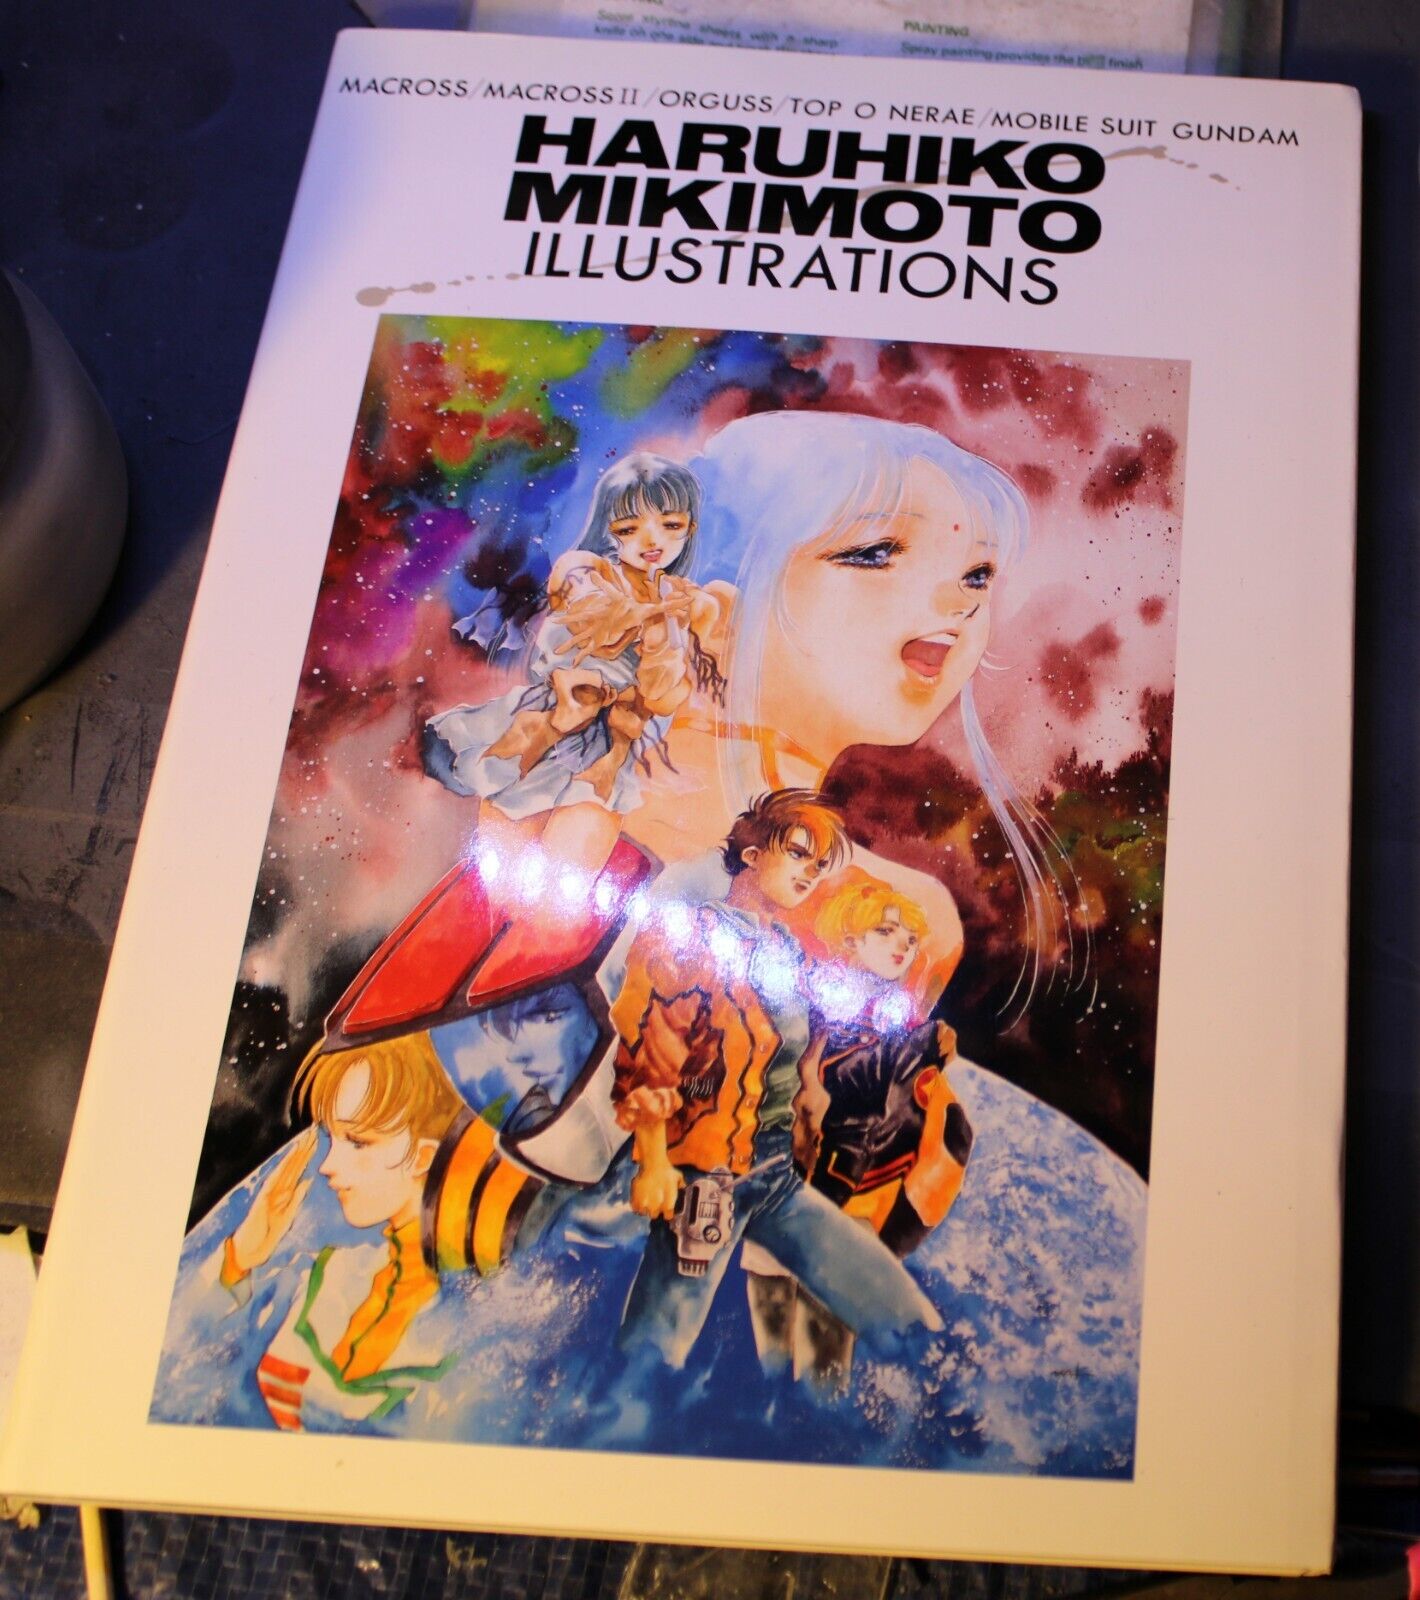 Haruhiko Mikimoto Illustrations Book 1992 Macross Robotech Orguss Gundum Art